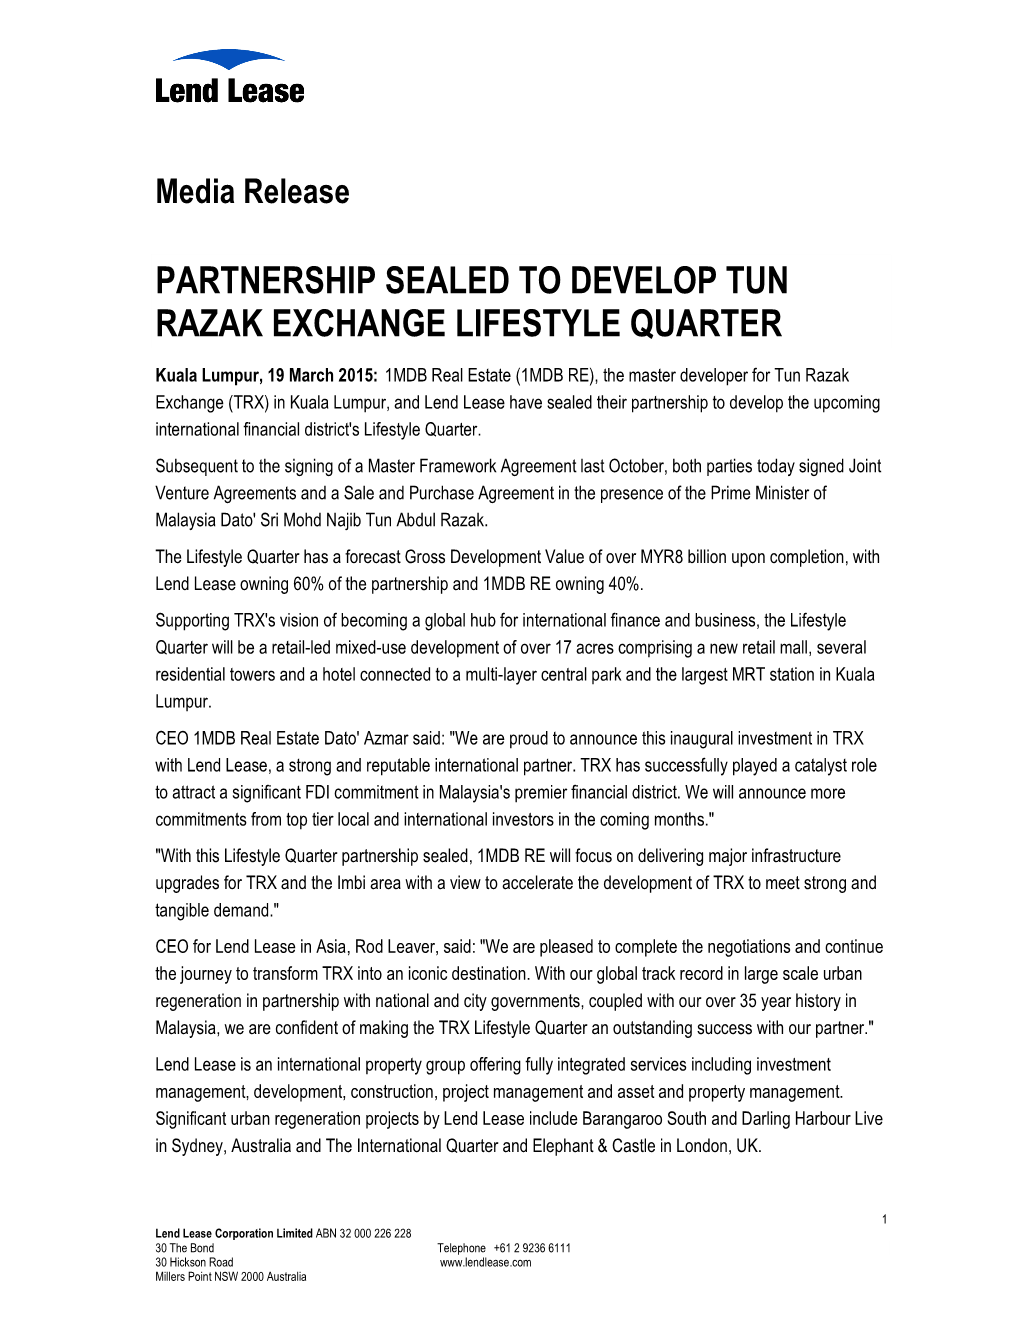 Partnership Sealed to Develop Tun Razak Exchange Lifestyle Quarter